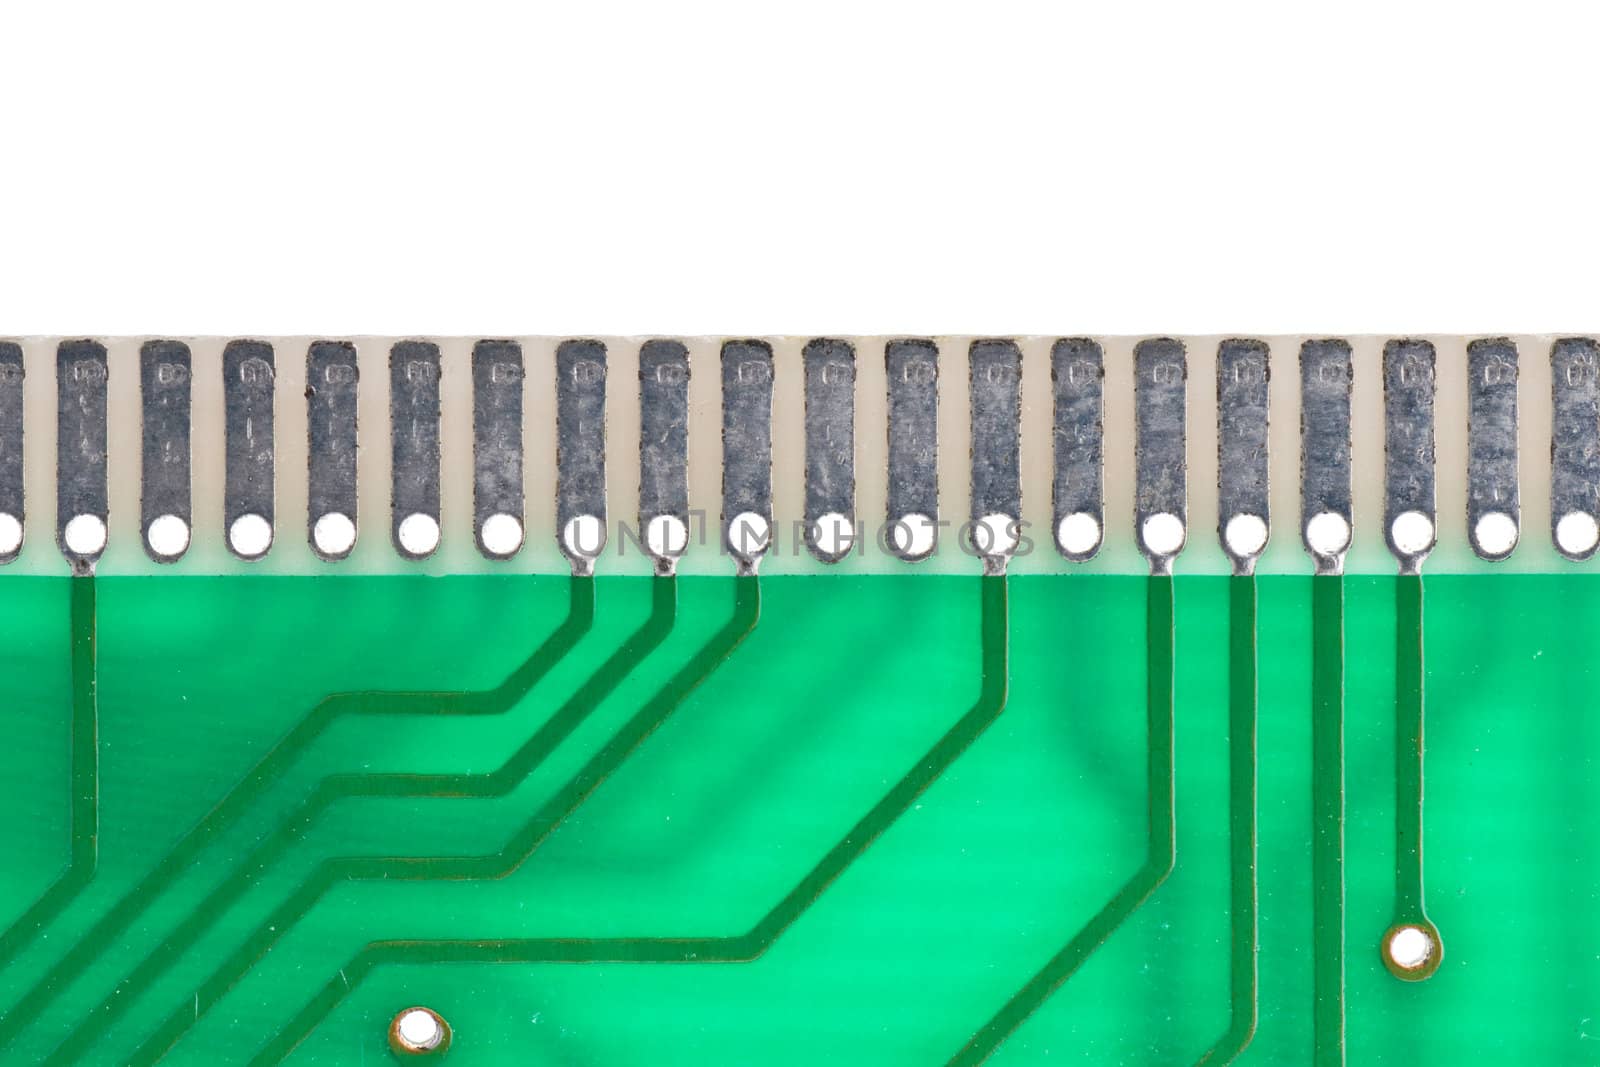 RAM edge connector up close
